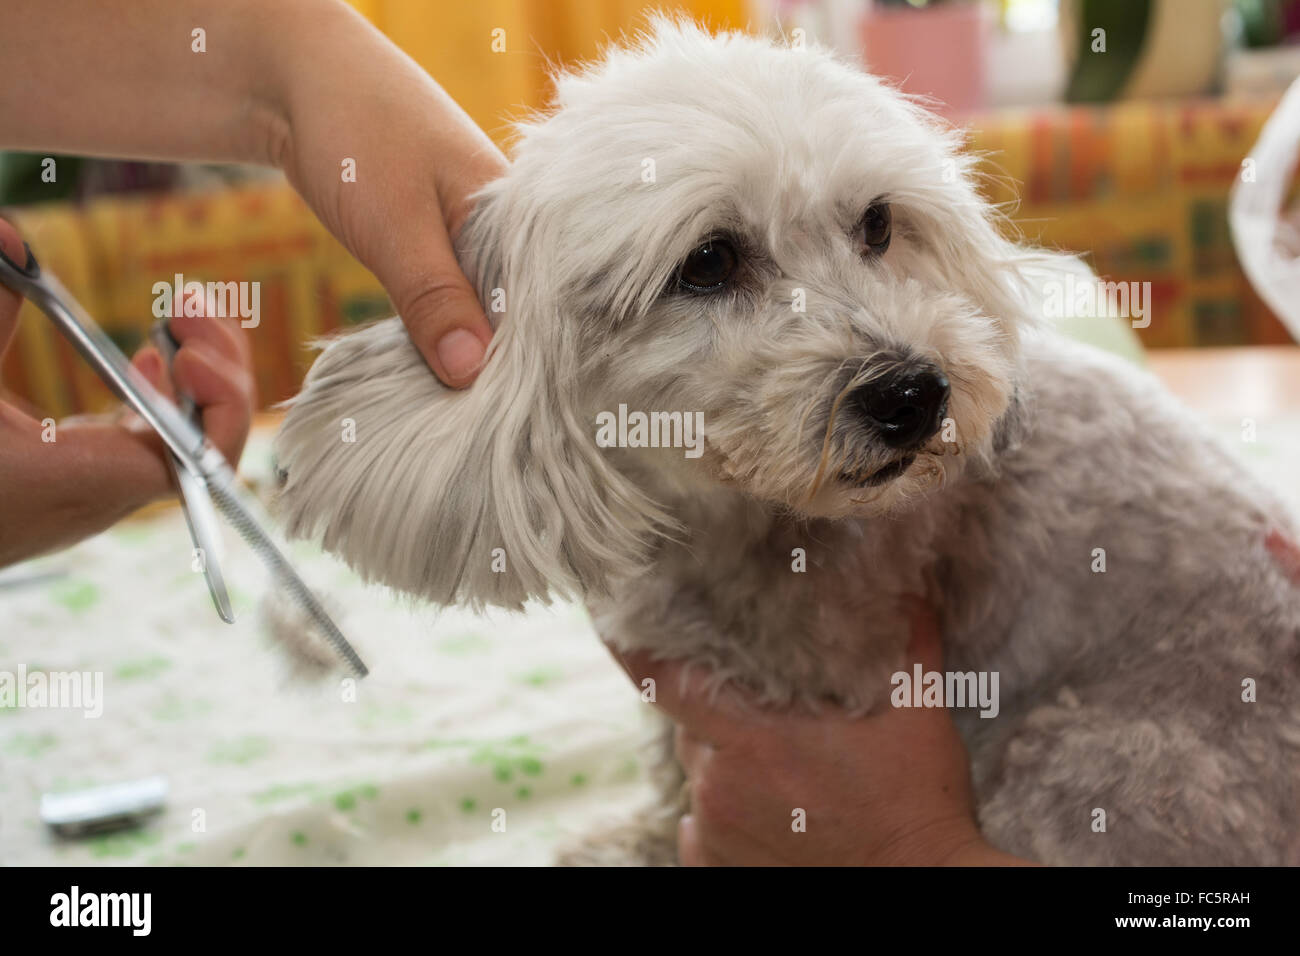 Dog Hairdresser Cuts Small Dog S Coat Stock Photo 93555801 Alamy